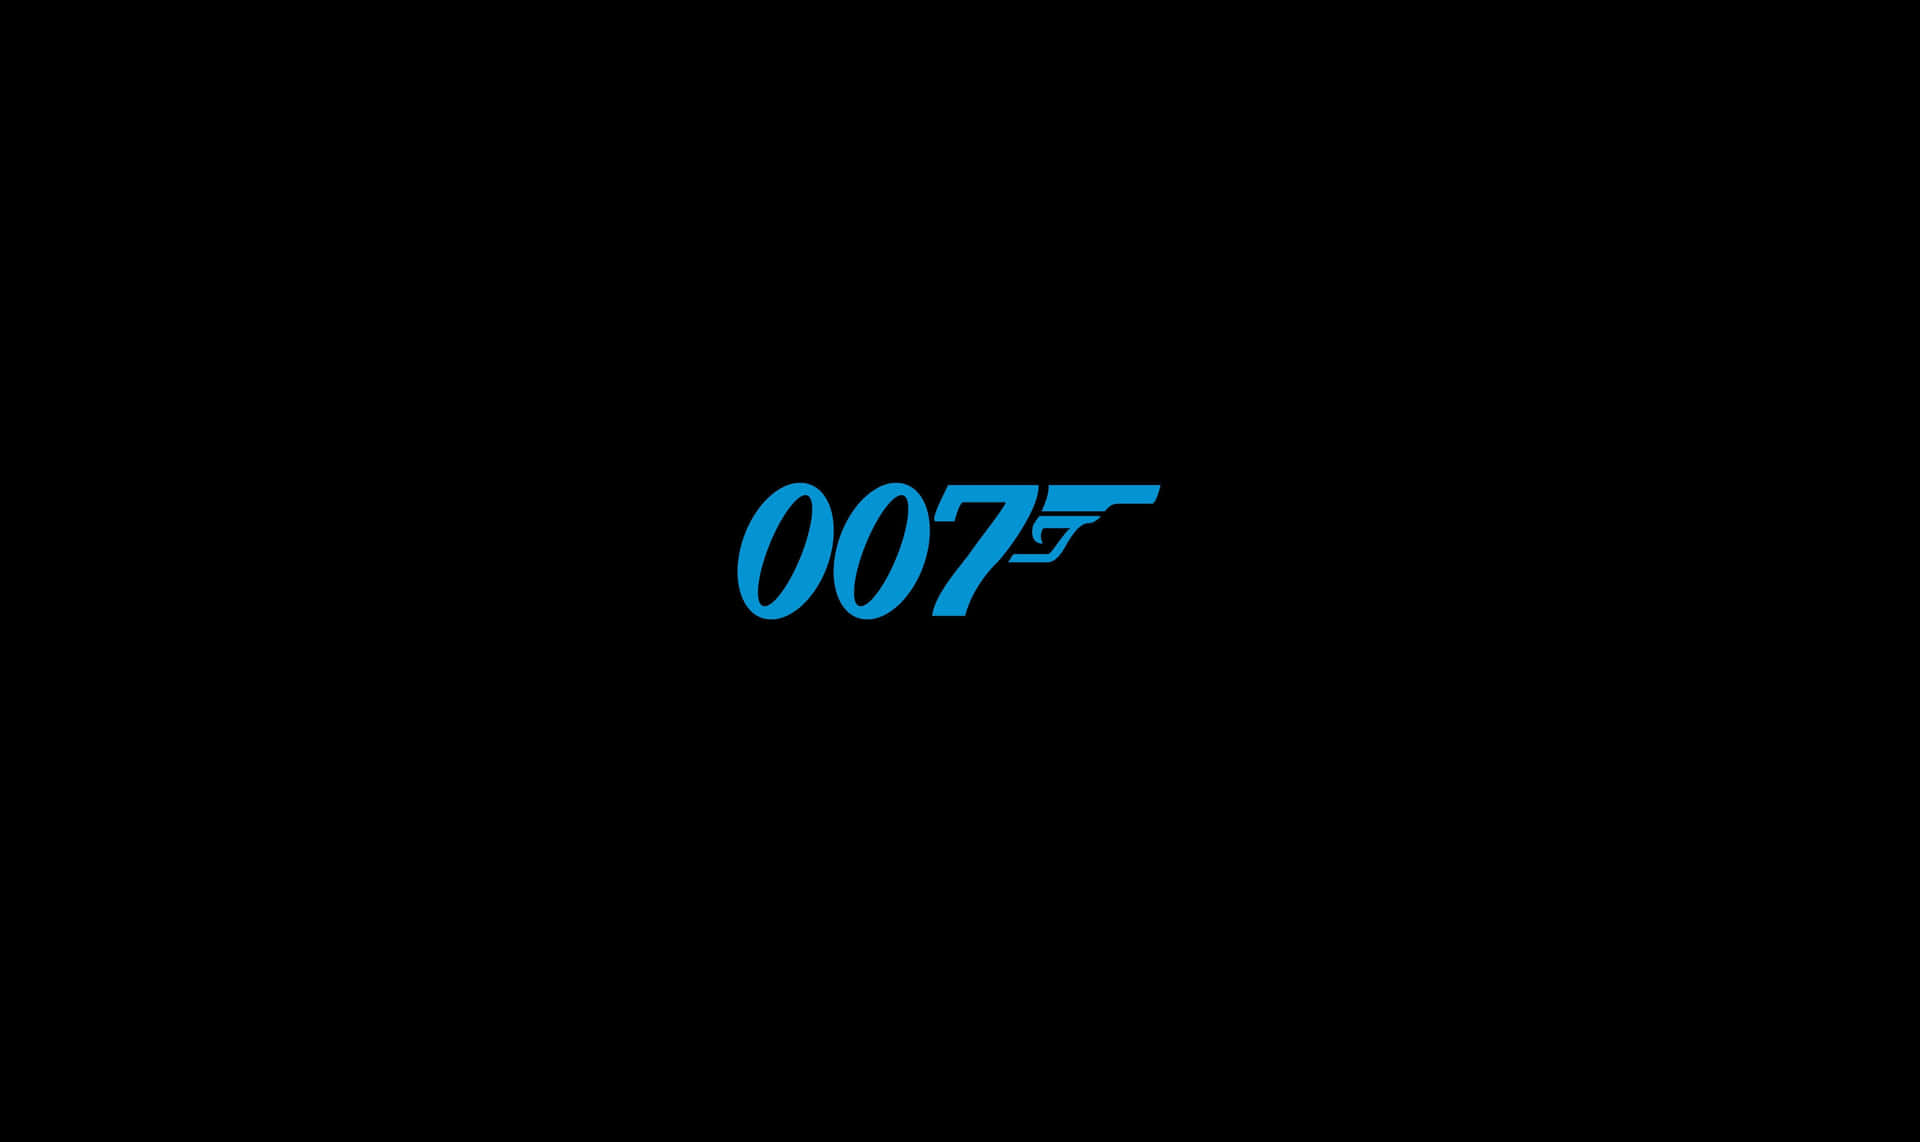 James Bond007 Logoon Black Background Wallpaper